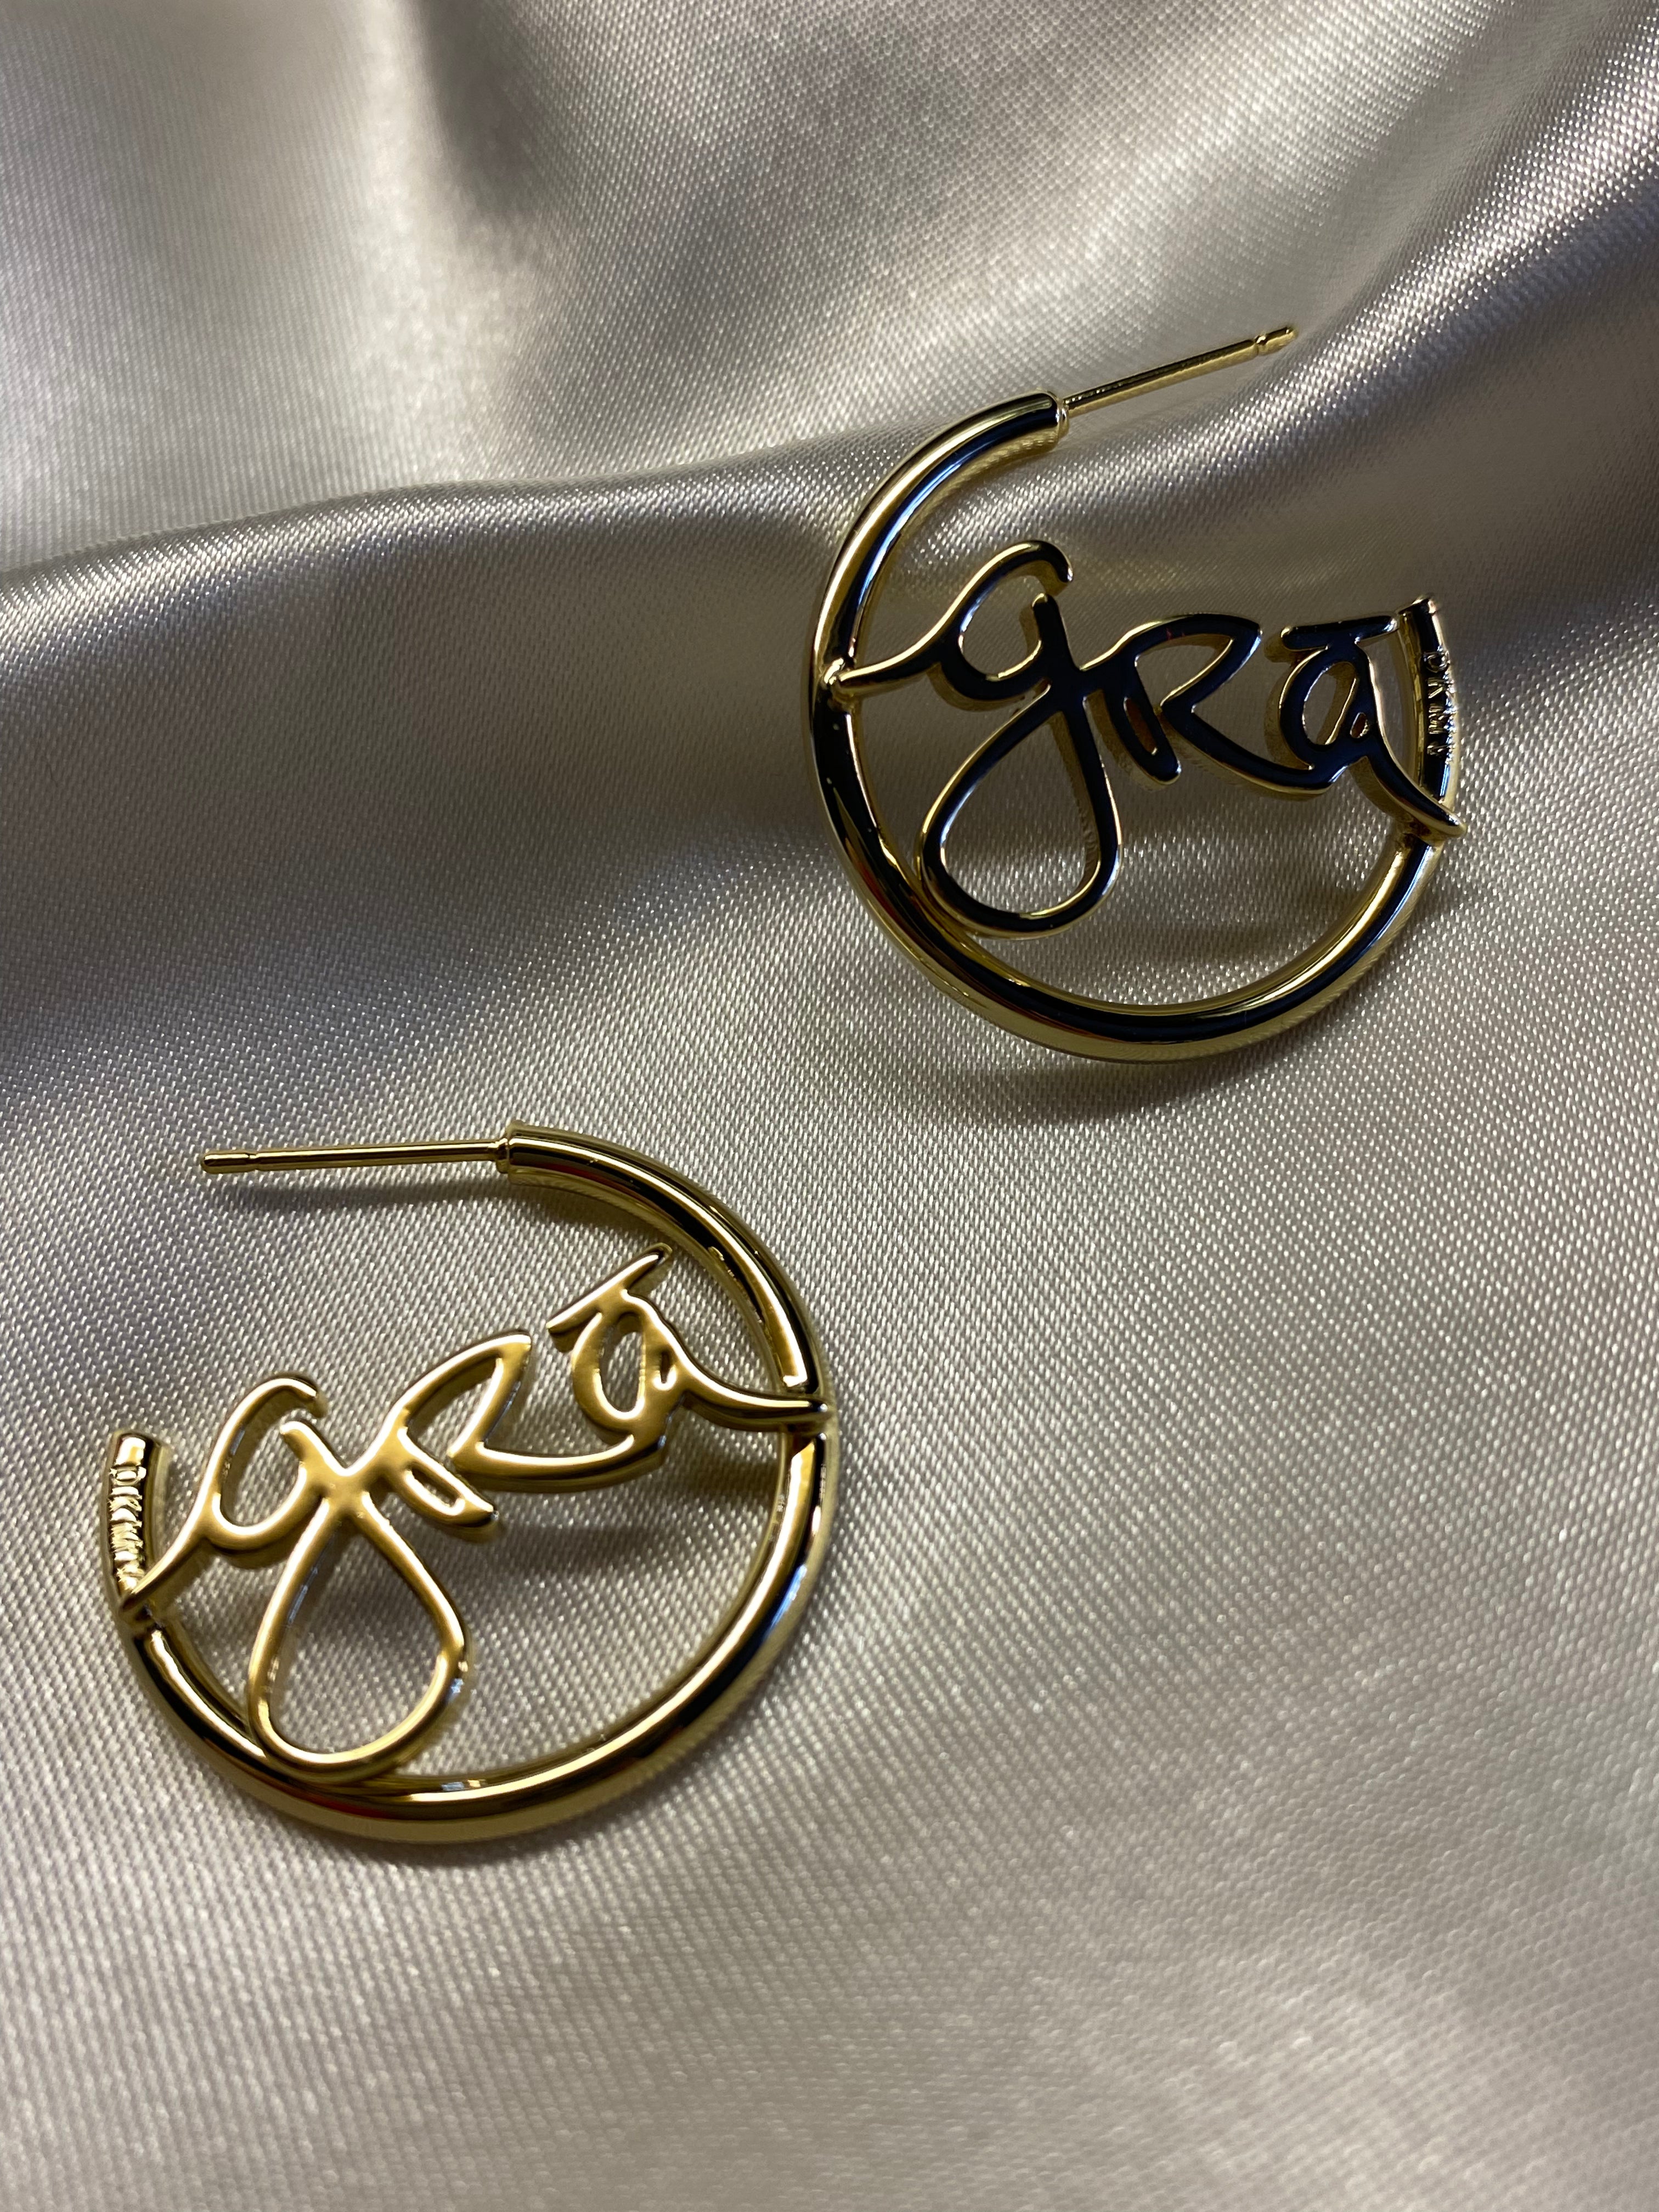 Grá, Irish Language, Irish Designed, Love, Gold Hoop, Gold Earring